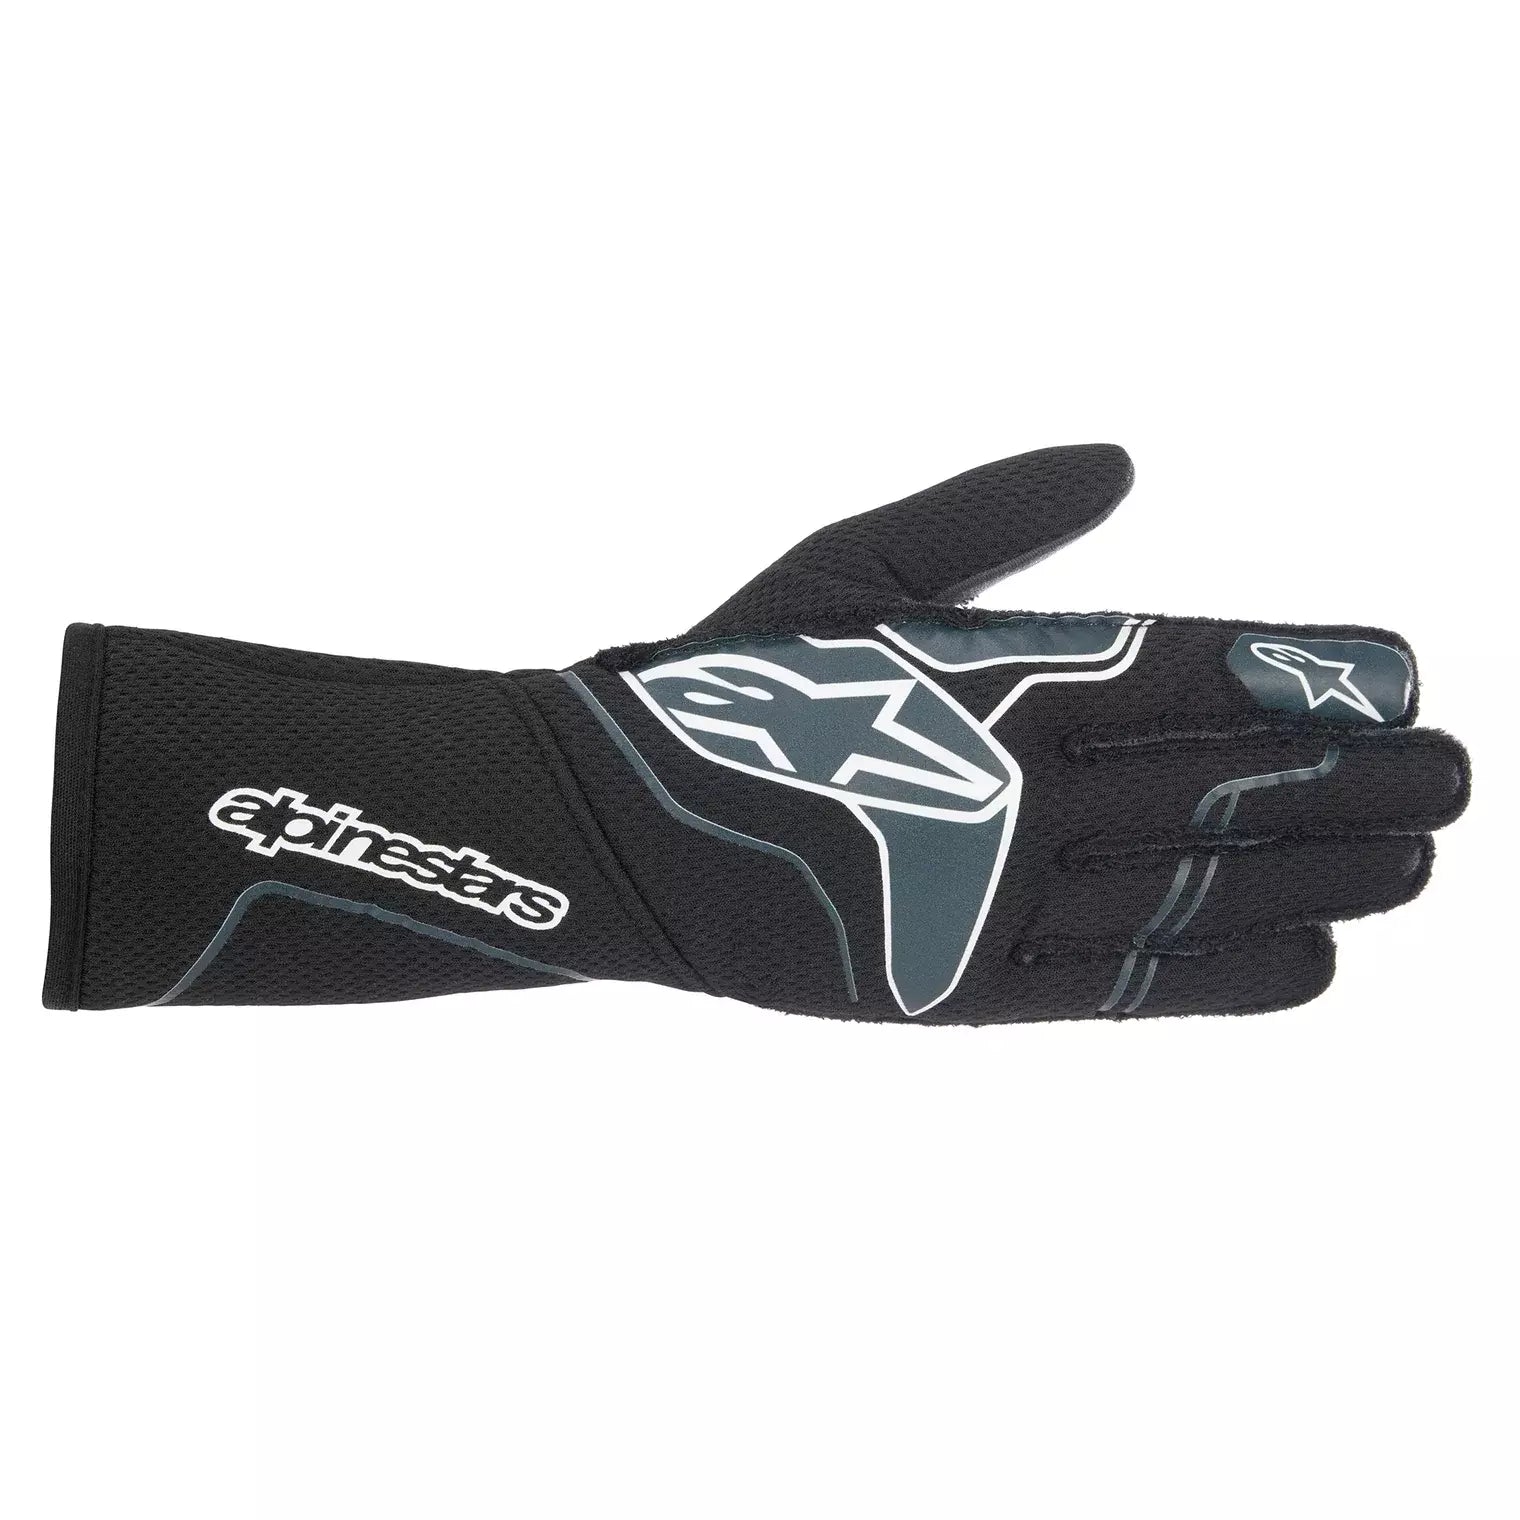 Alpinestars Gloves Tech 1-ZX Black / Grey Medium Safety Clothing Driving Gloves main image